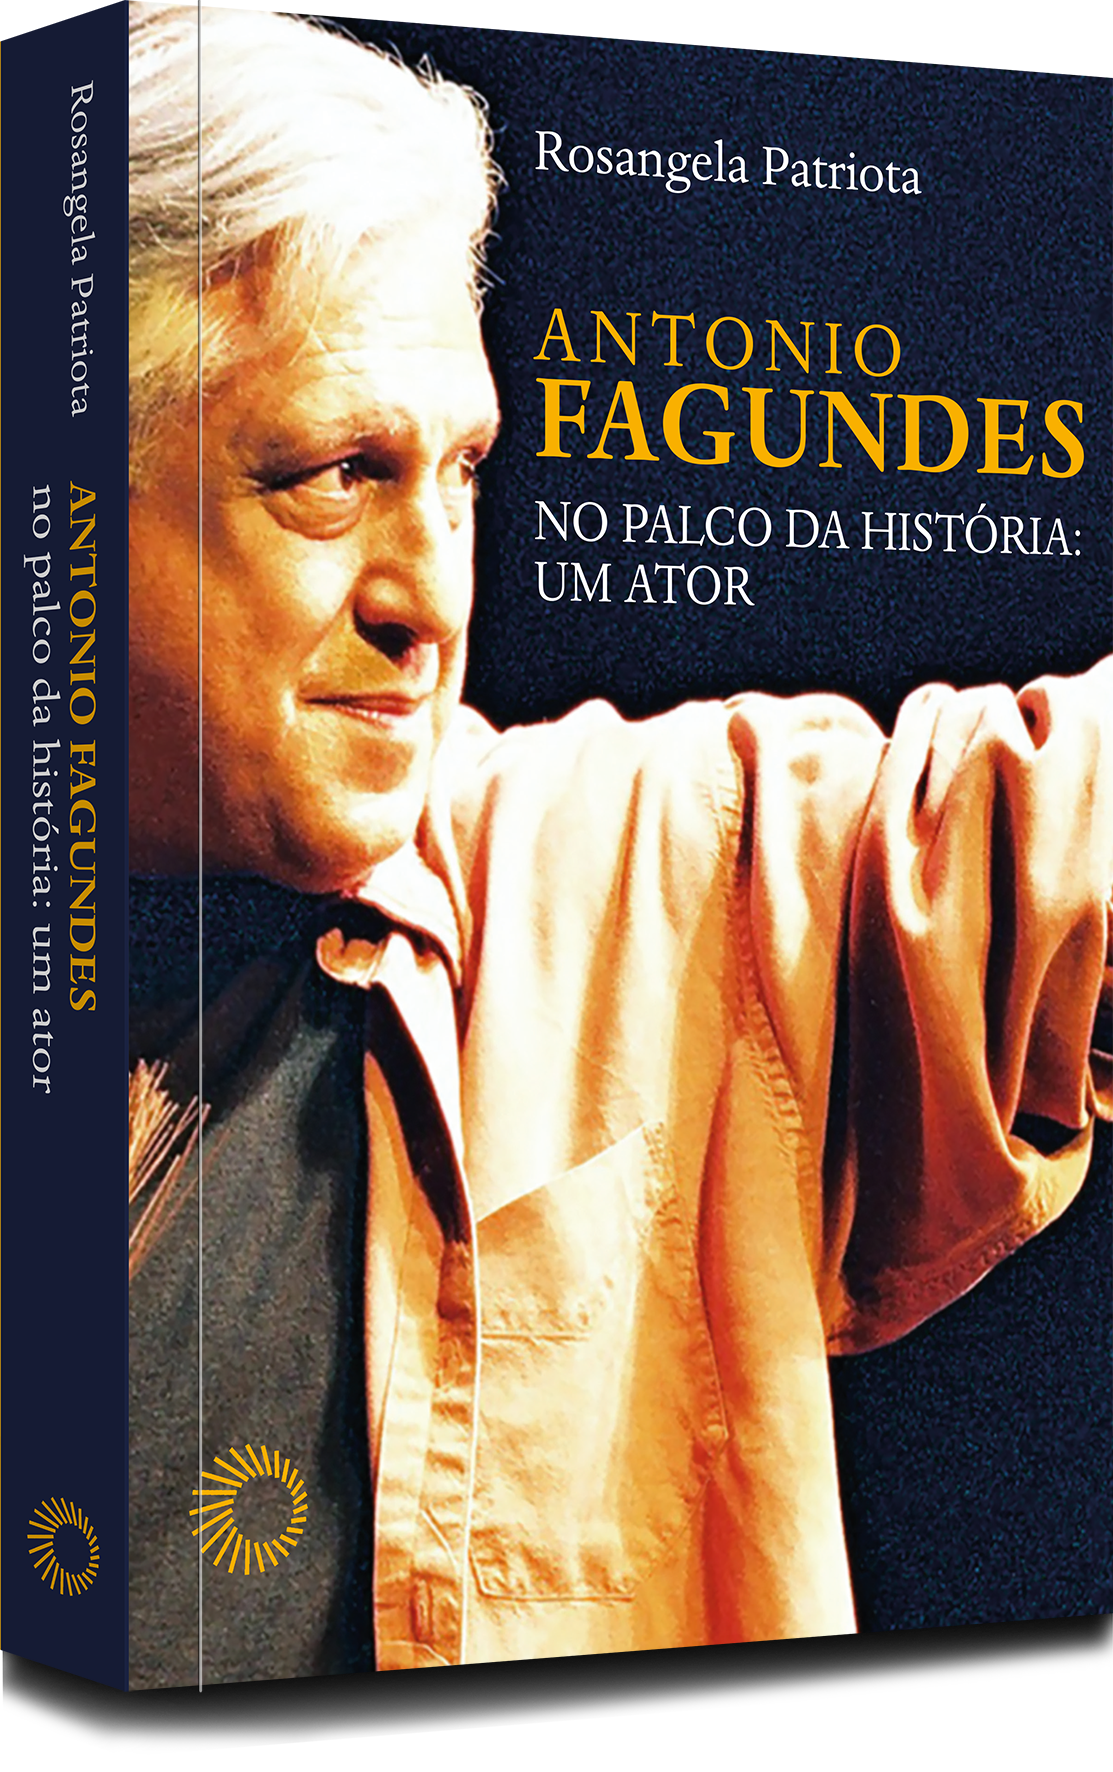 Antonio Fagundes no palco da historia_LSC